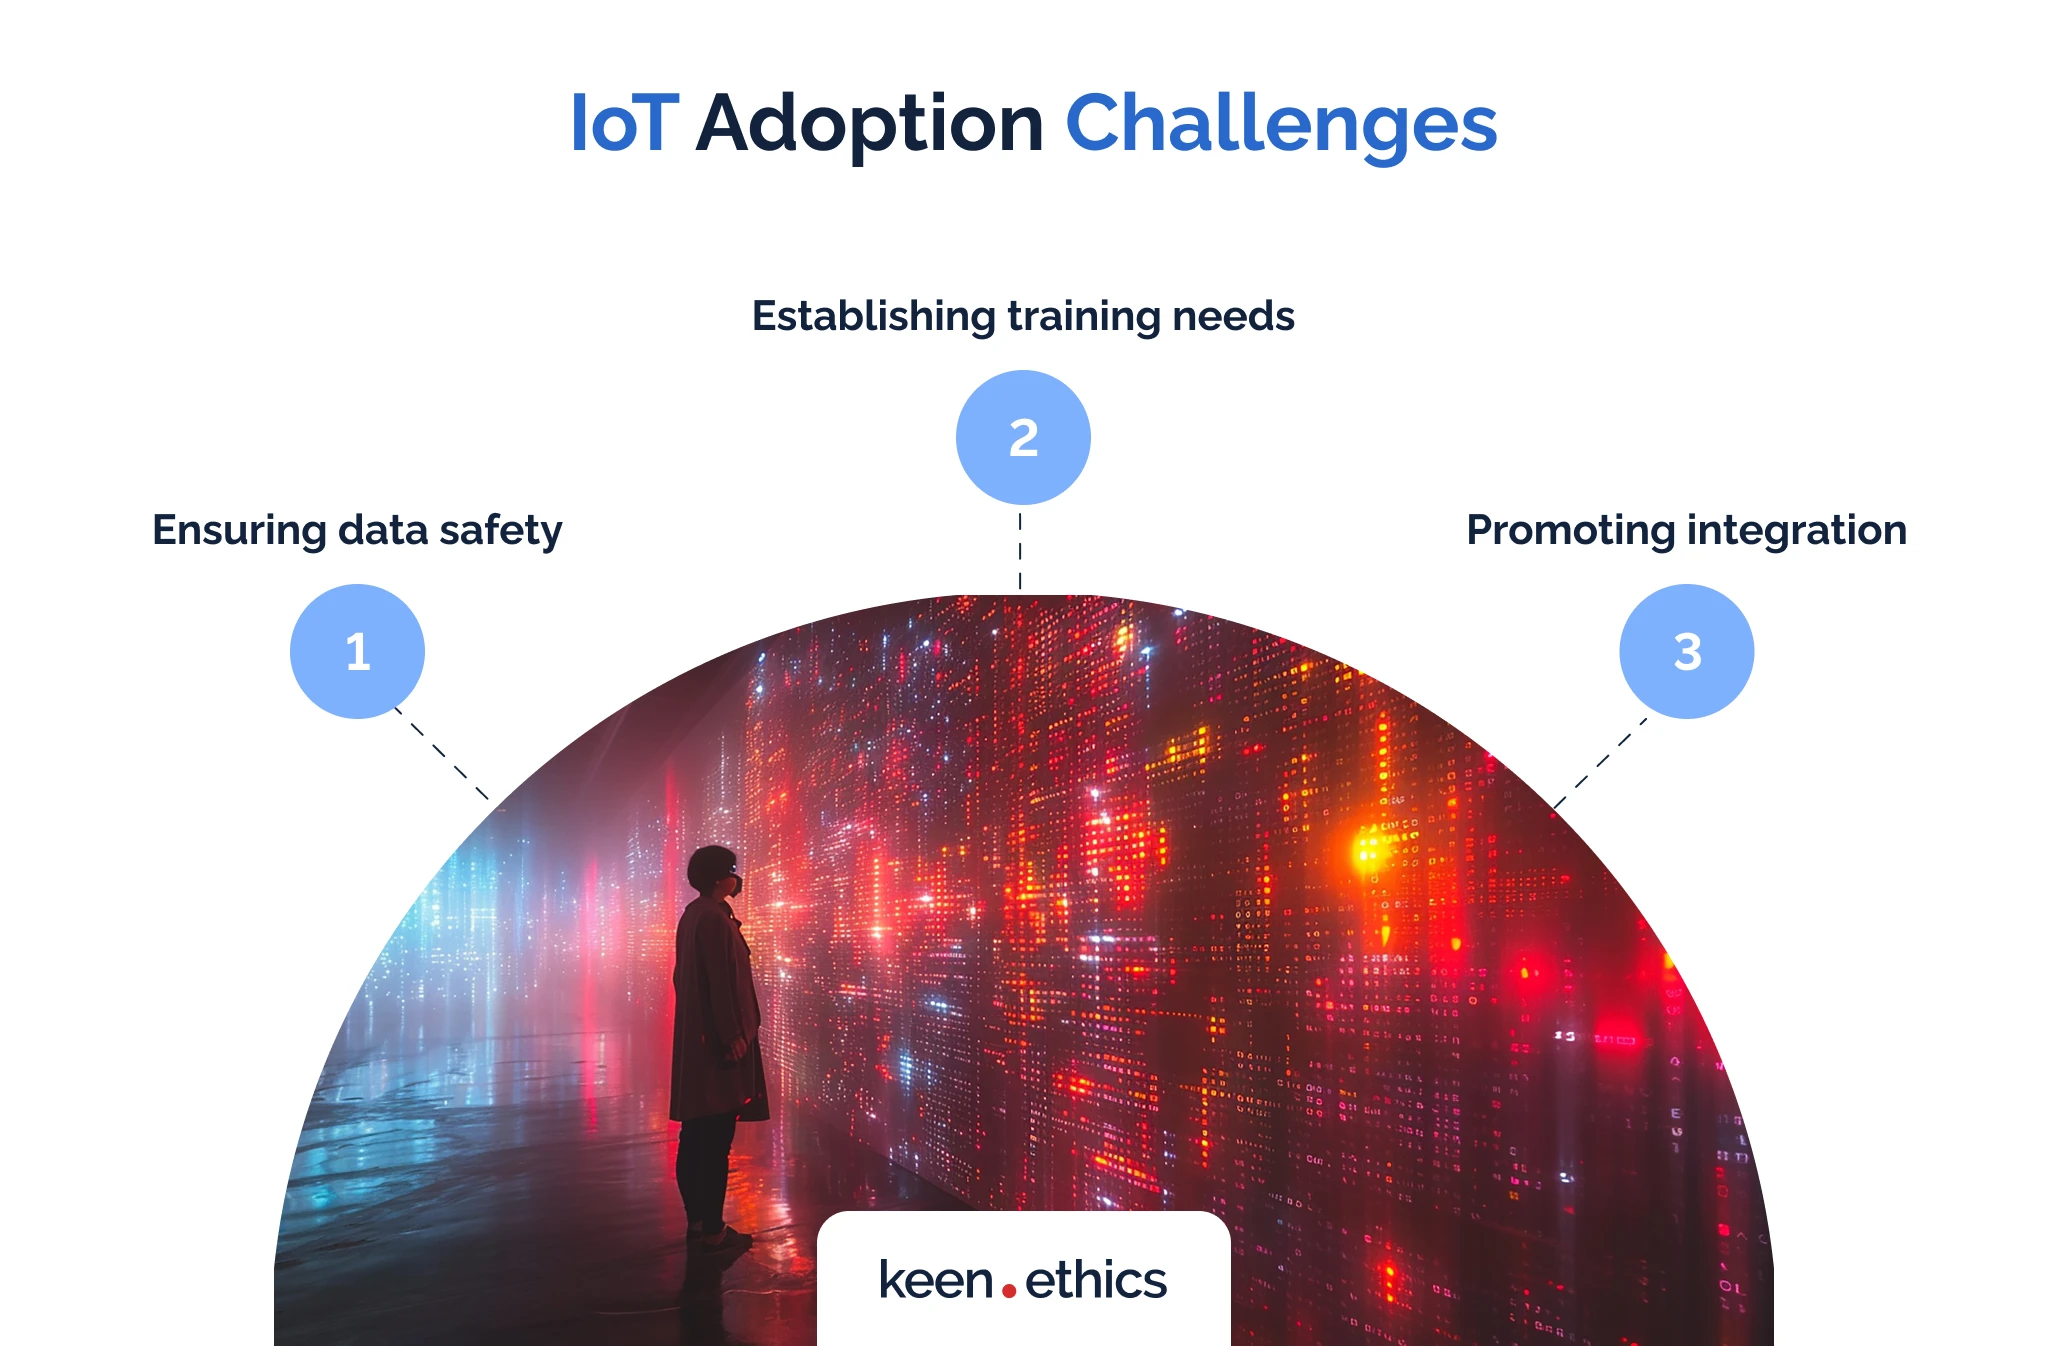 IoT adoption challenges